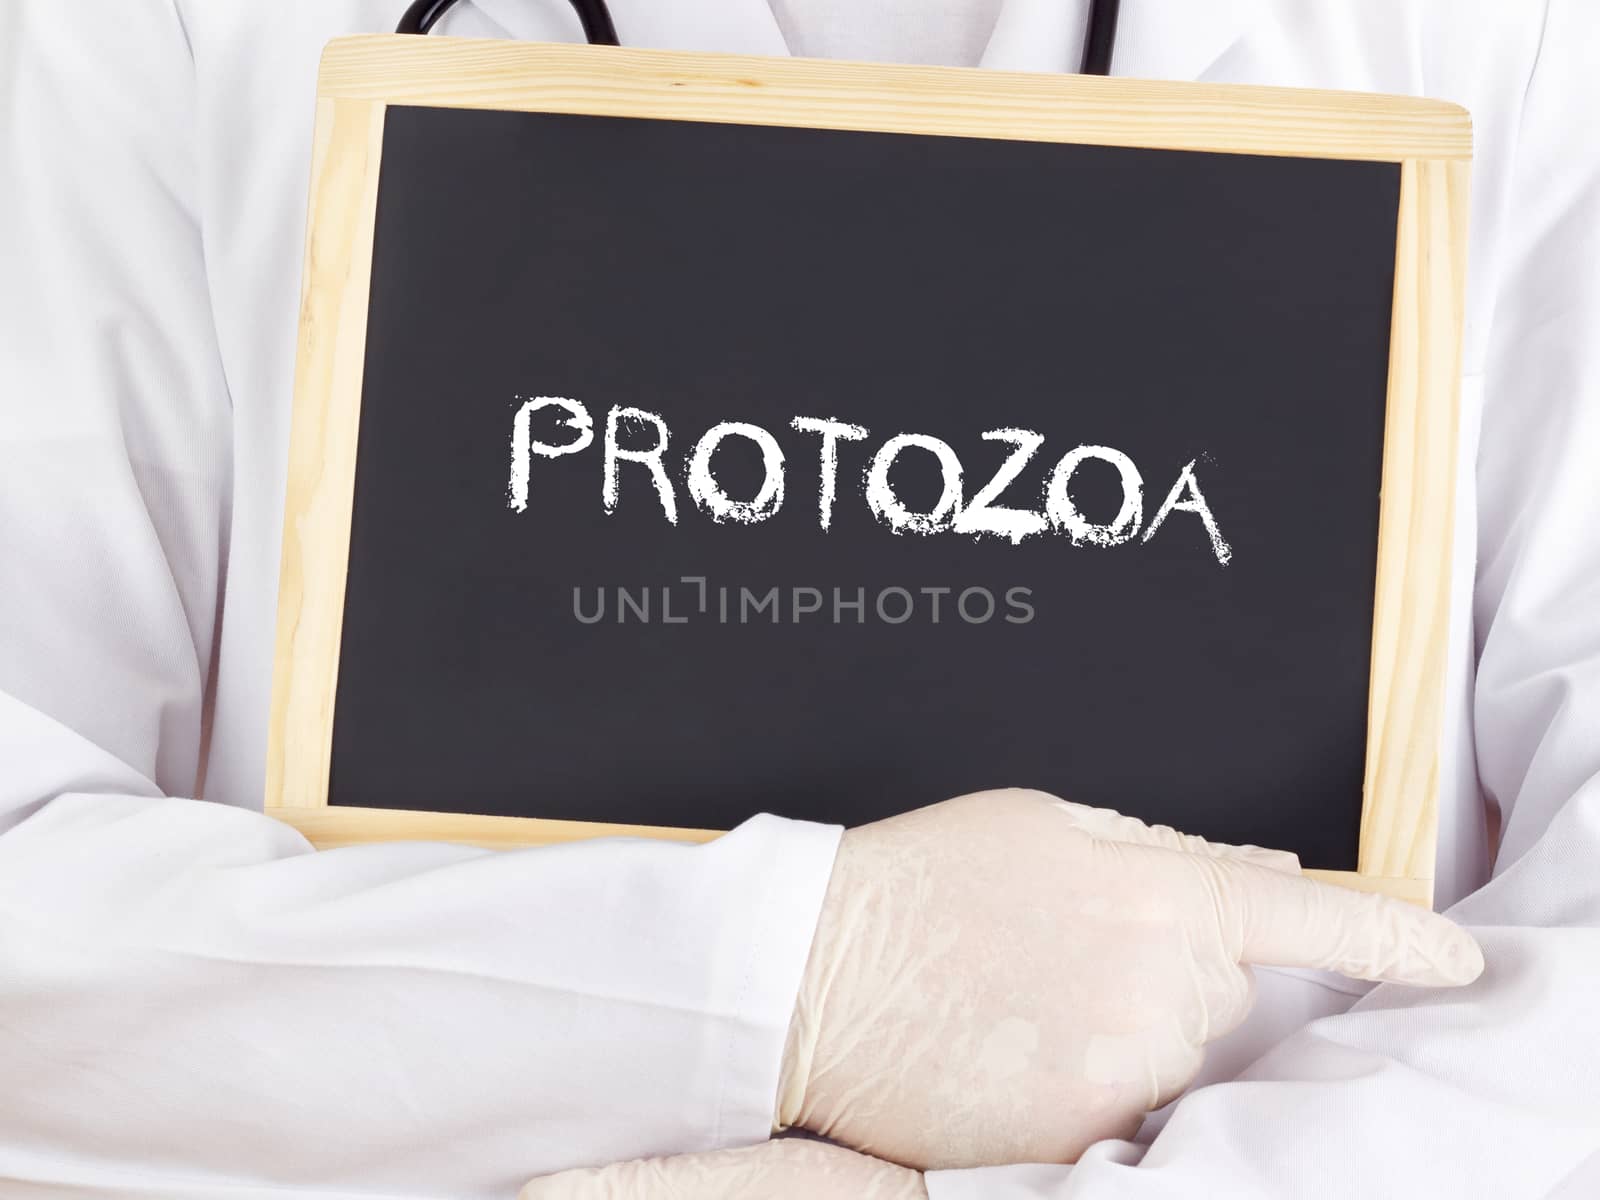 Doctor shows information: protozoa